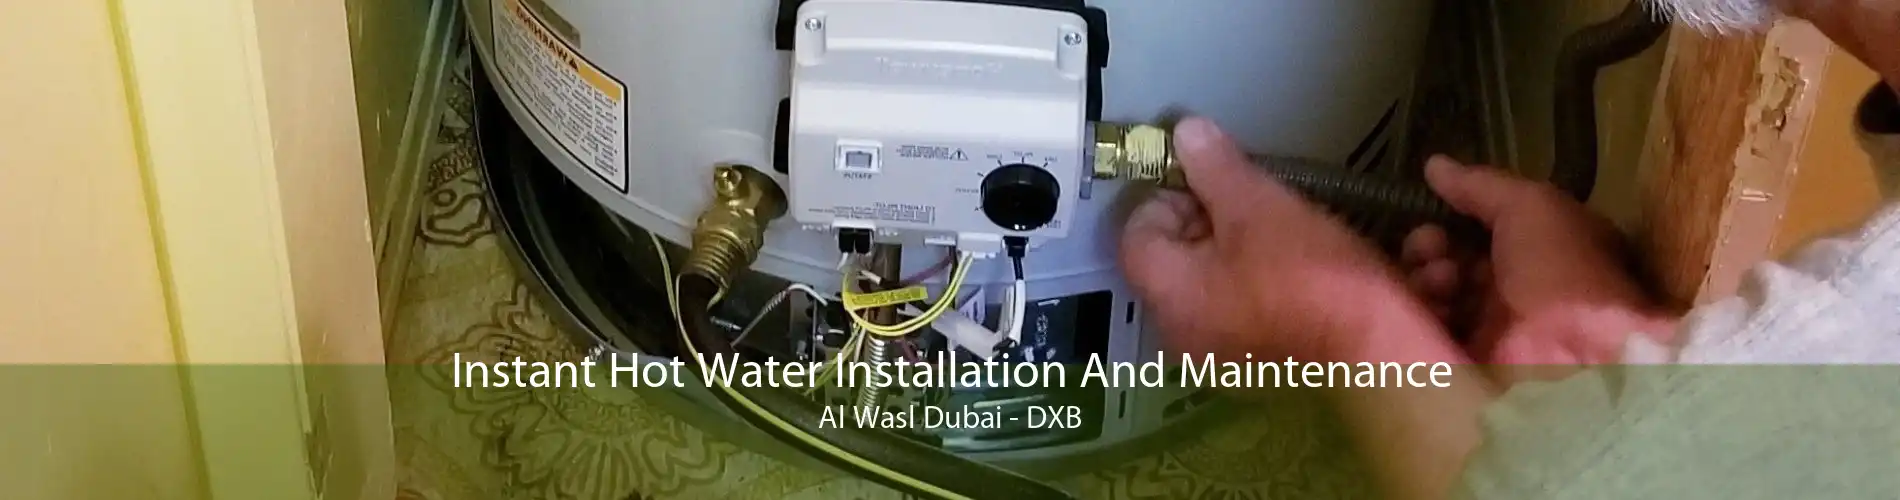 Instant Hot Water Installation And Maintenance Al Wasl Dubai - DXB